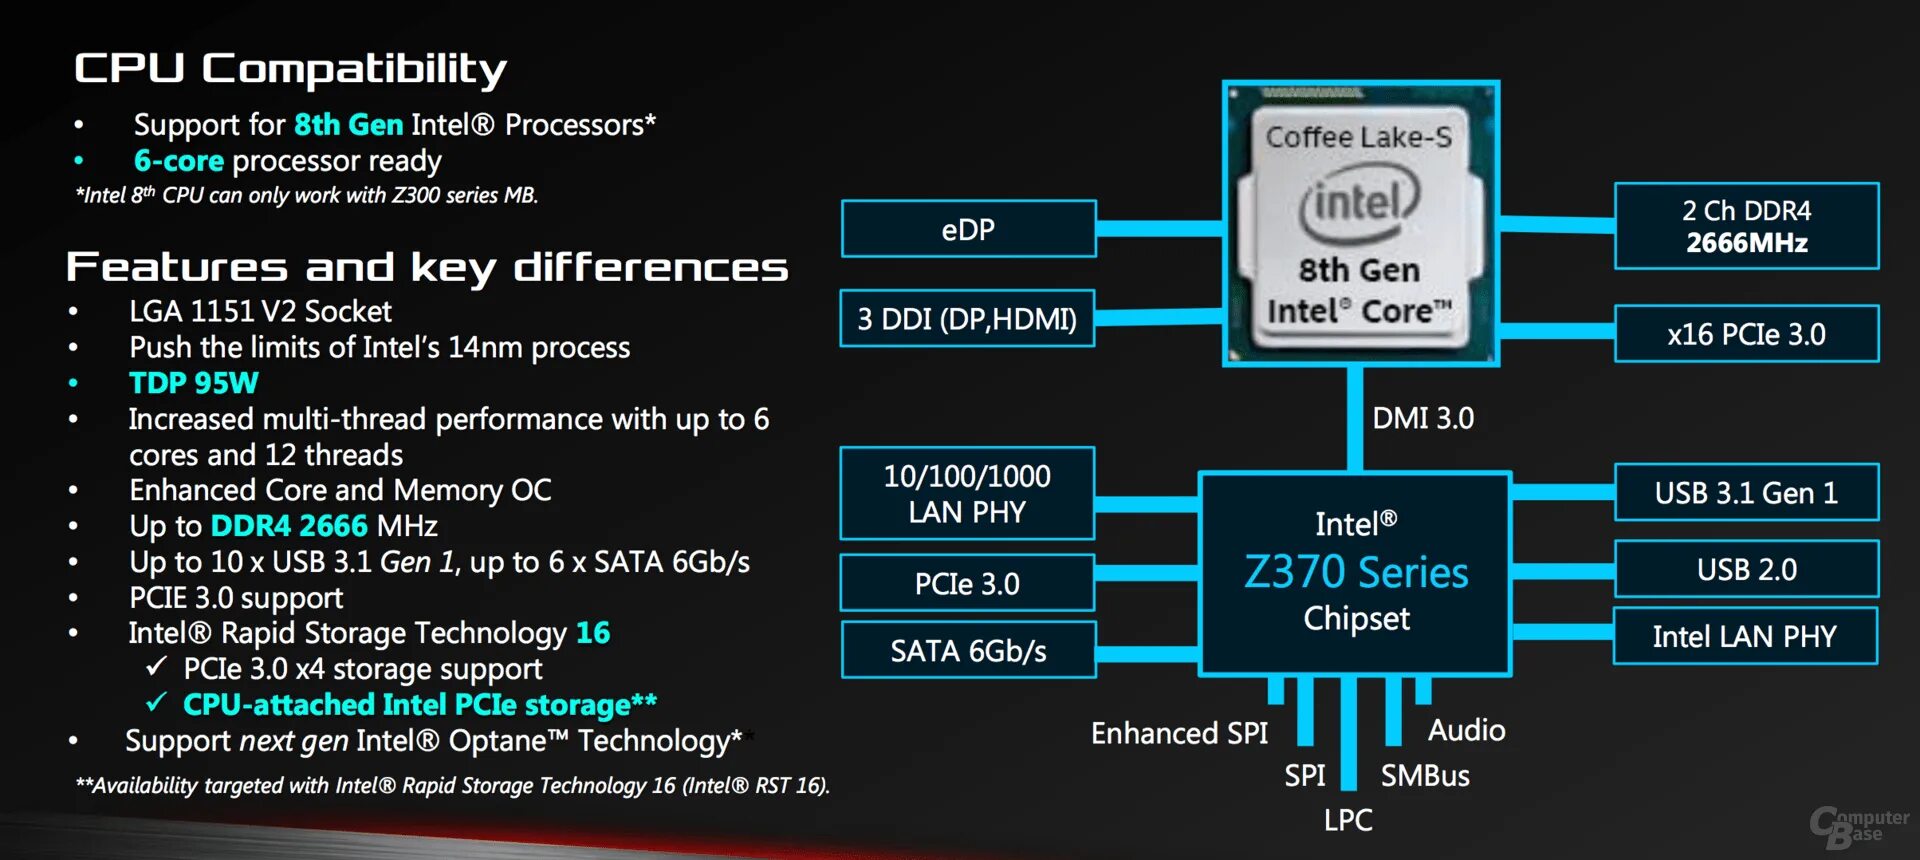 Intel Coffee Lake-s IMC. Архитектура Intel i7 8700. Intel DMI 4.0. Processor 8th Gen Intel. Power support intel